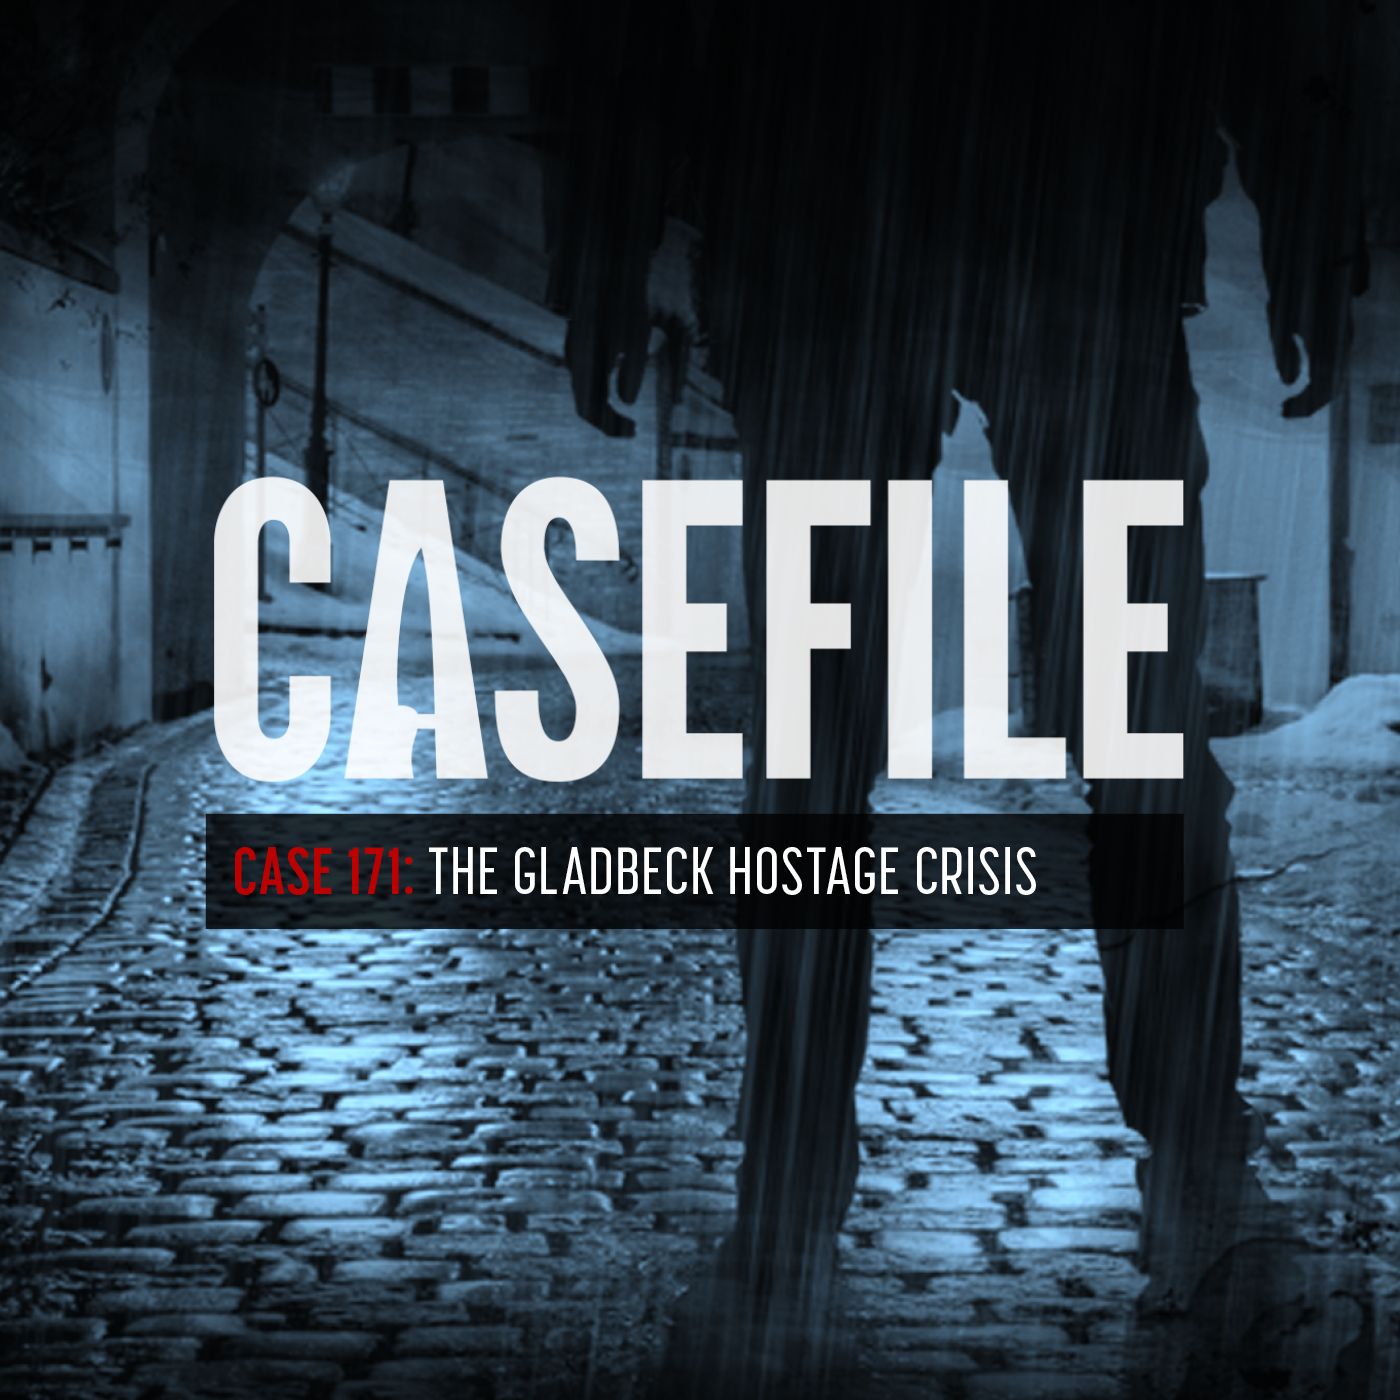 Case 171: The Gladbeck Hostage Crisis